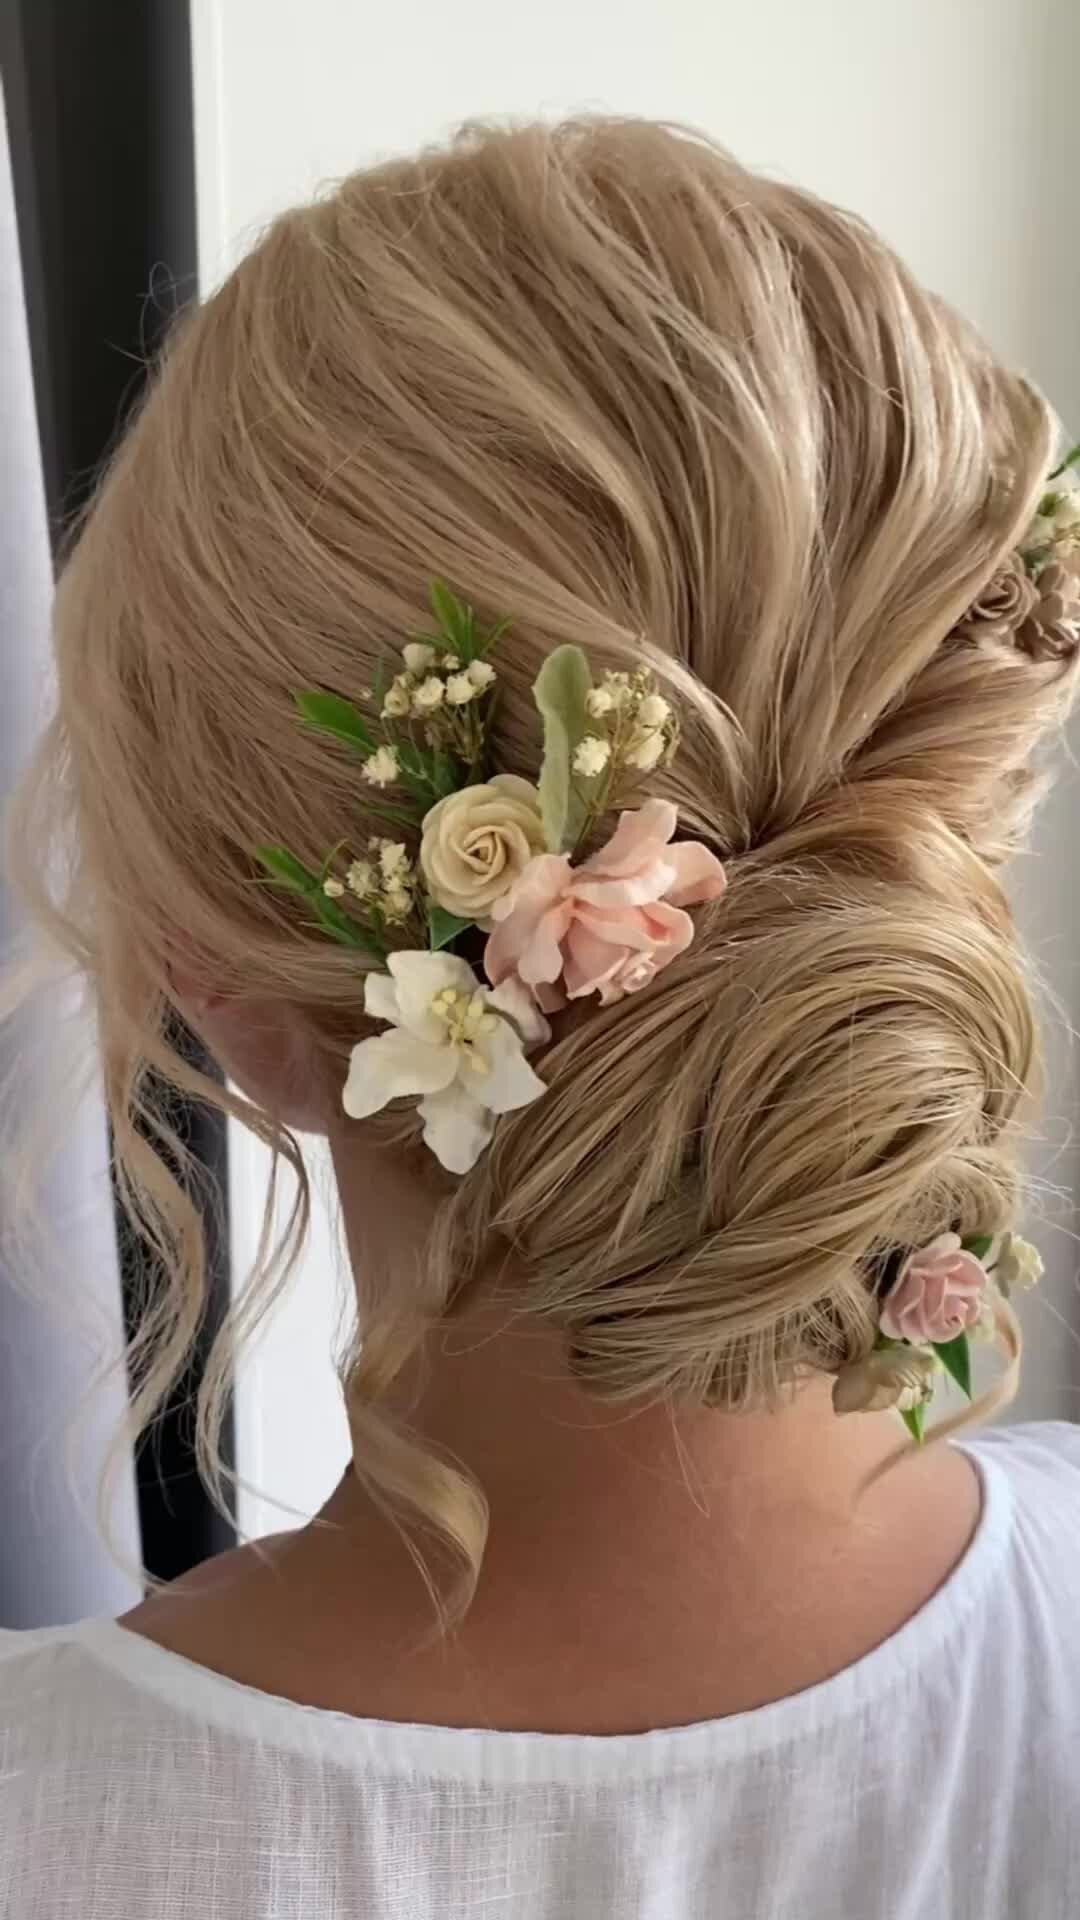 Прически с цветами в волосах на свадьбу